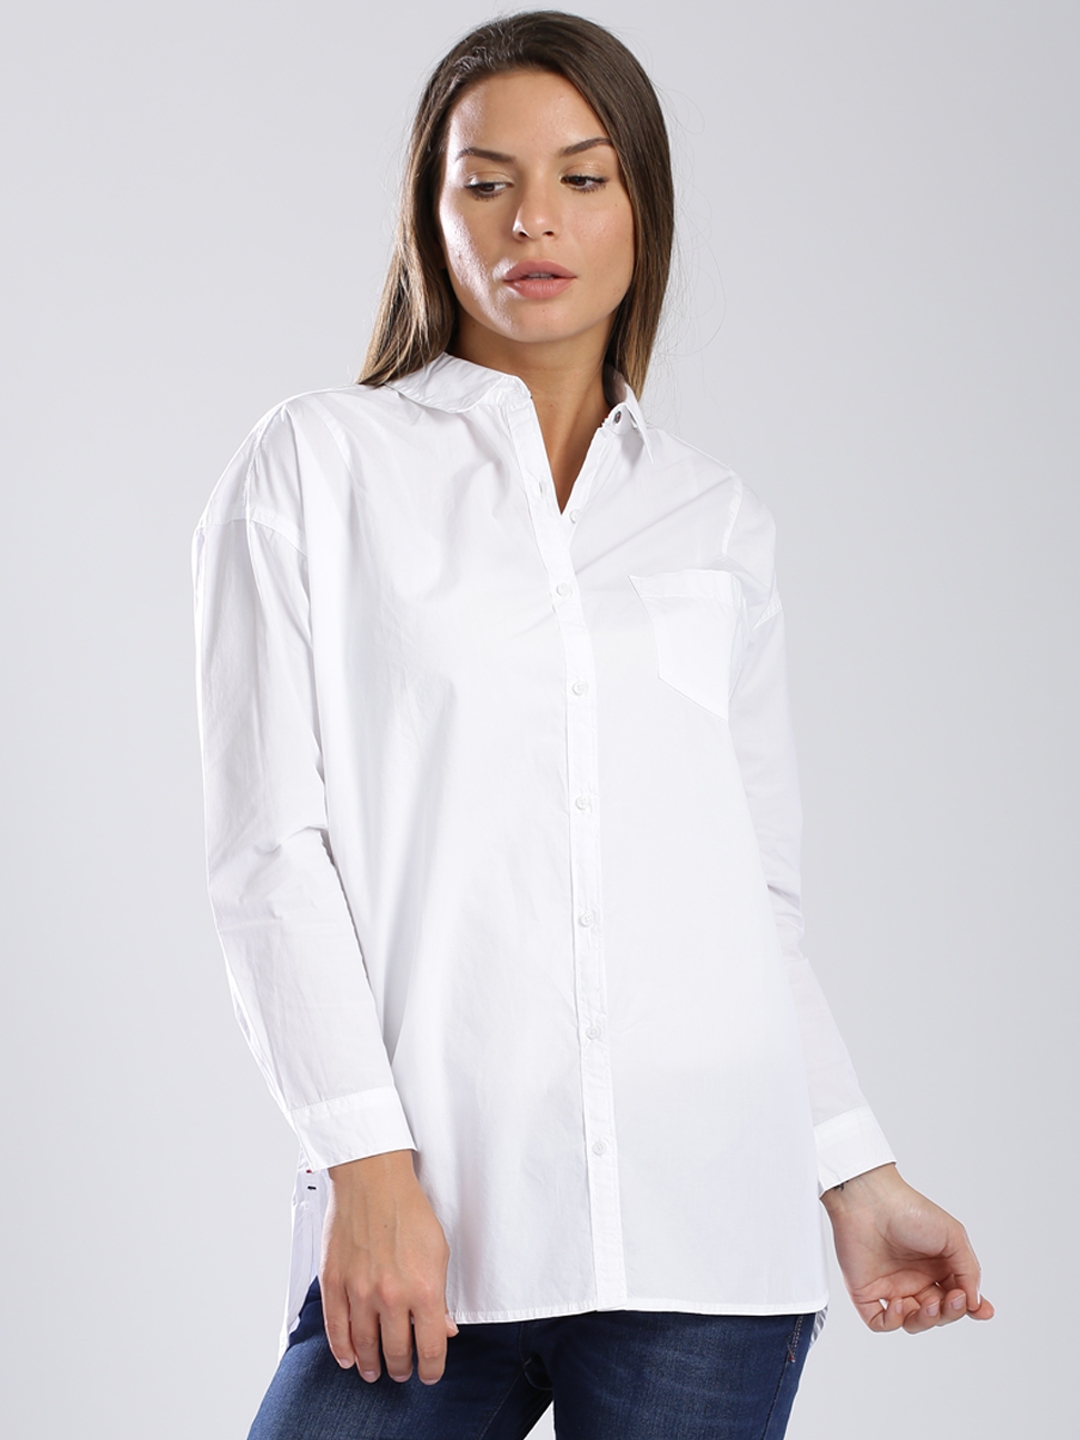 Buy Tommy Hilfiger White Shirt - Shirts for Women 1207680 | Myntra